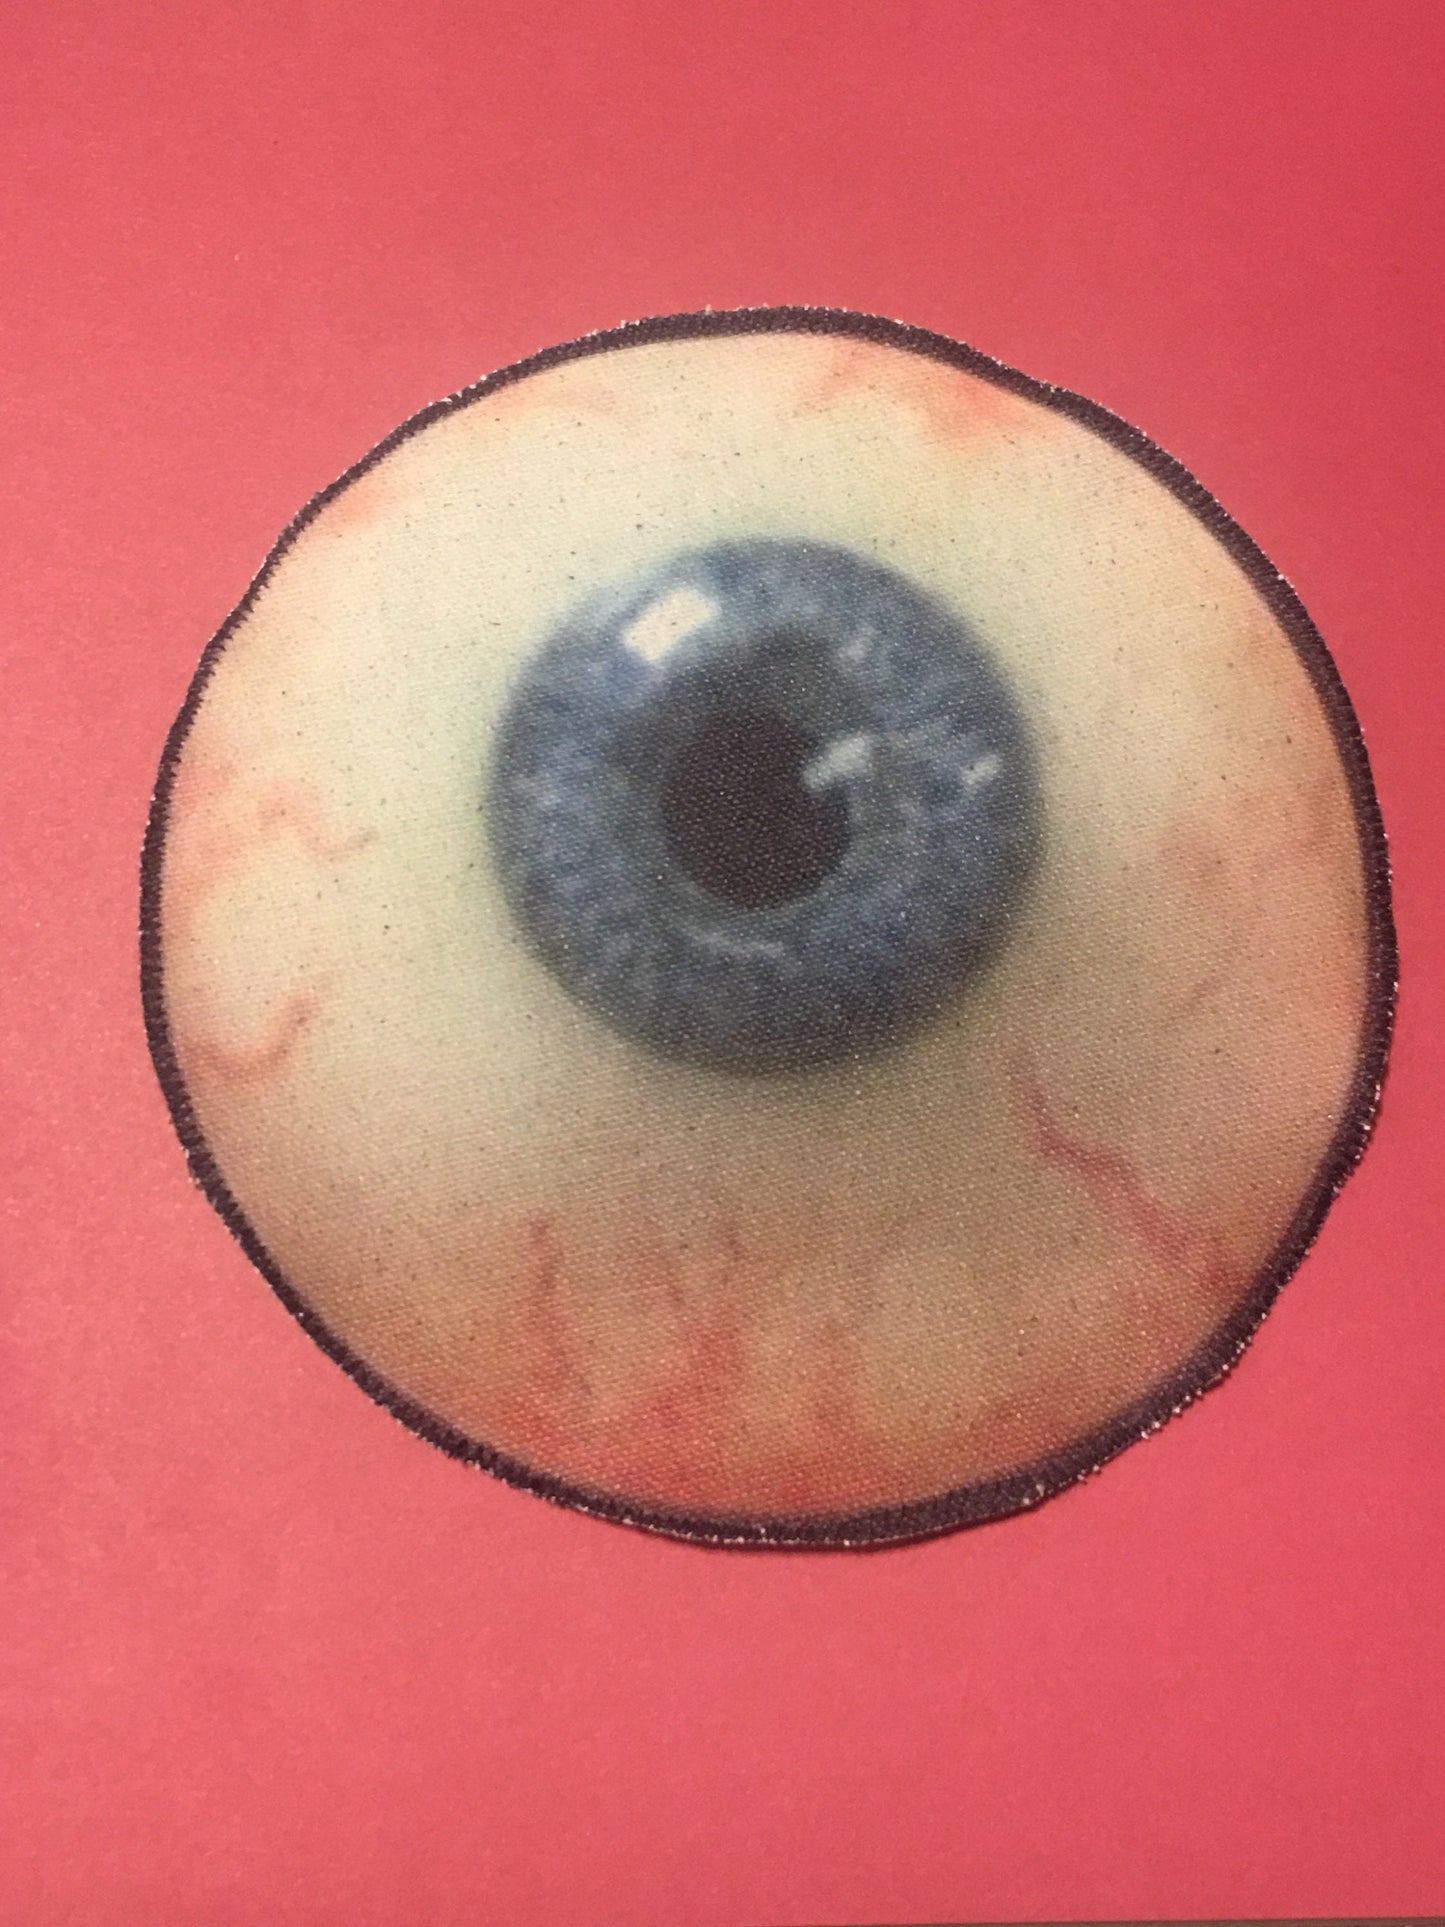 eyeball patch